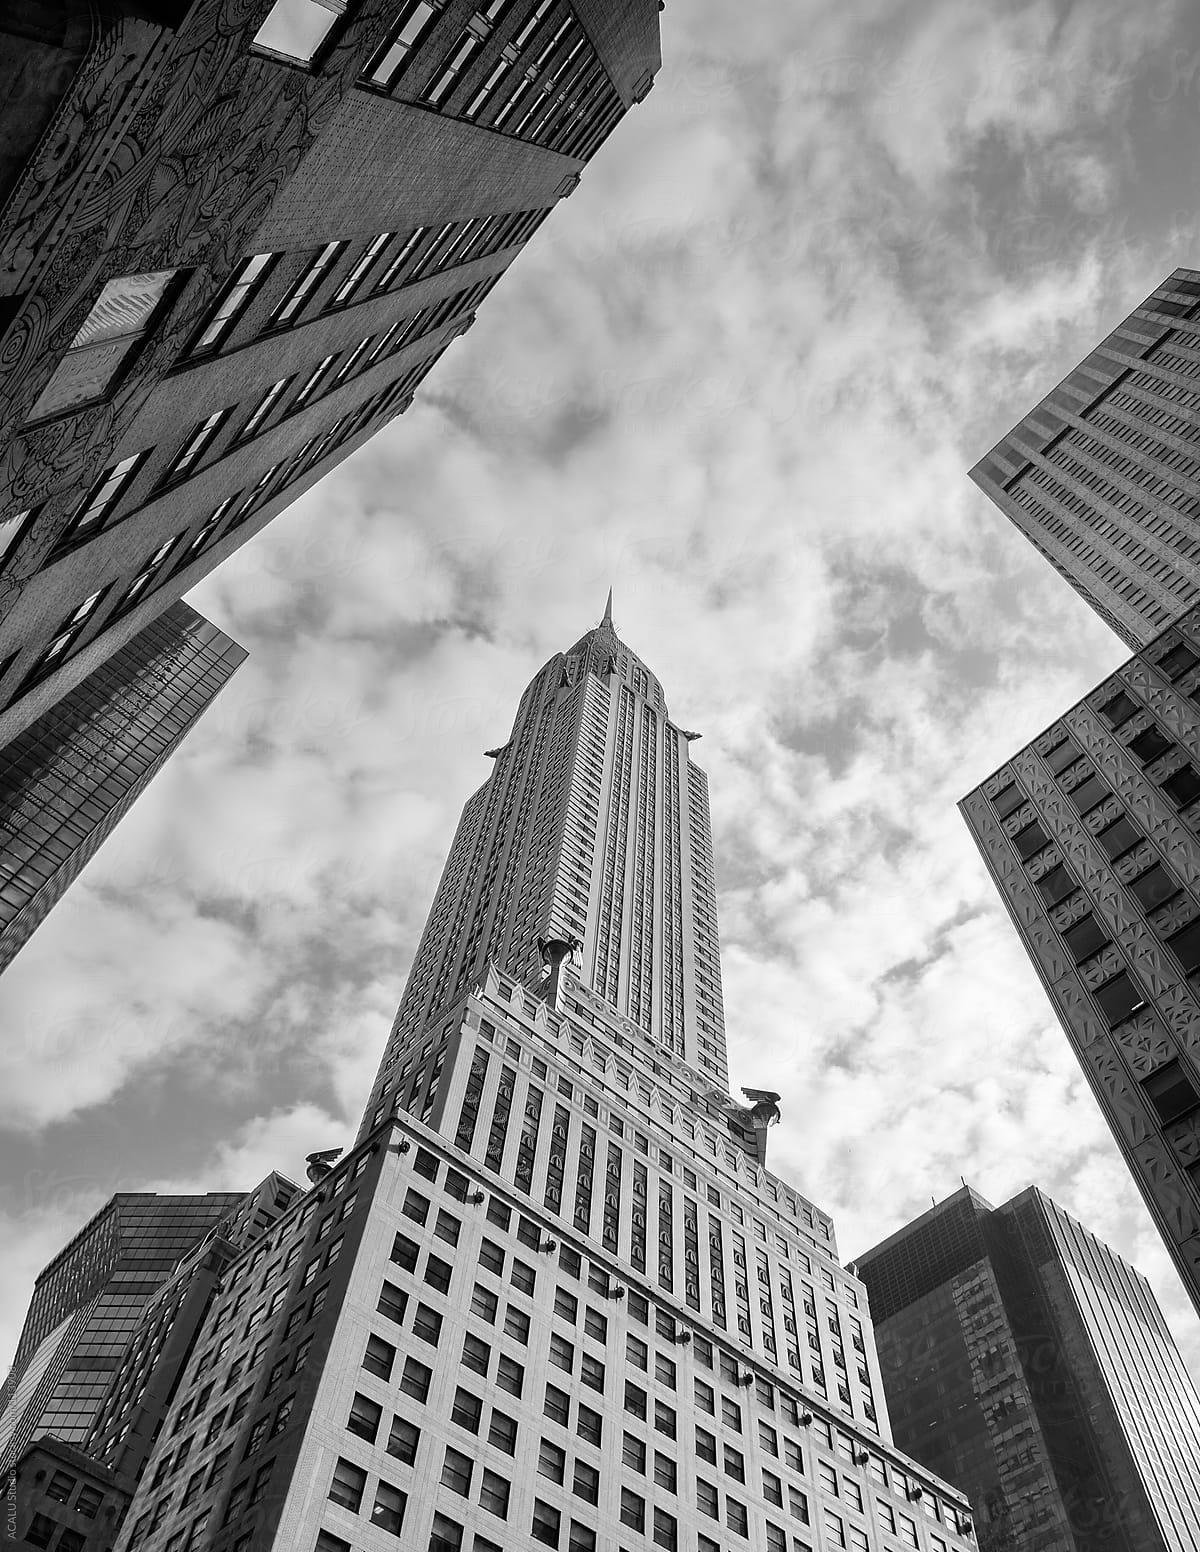 Chrysler Building from the street